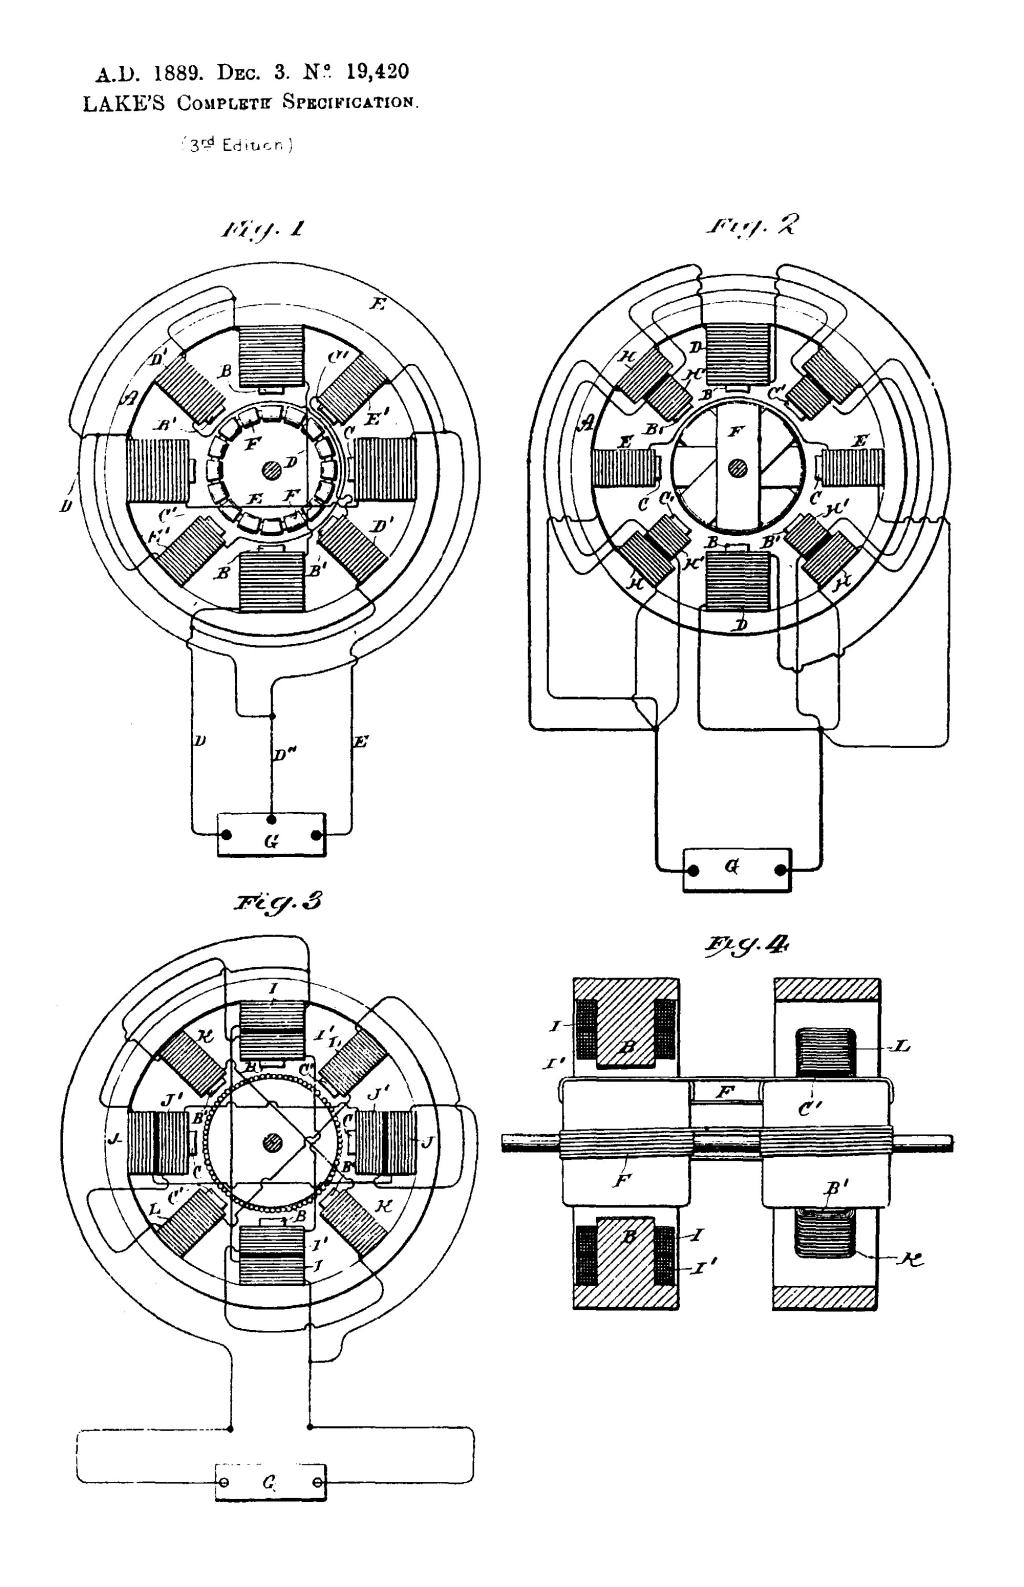 Nikola Tesla British Patent 19,420 - Improvements in Alternating Current Electro-Magnetic Motors - Image 1